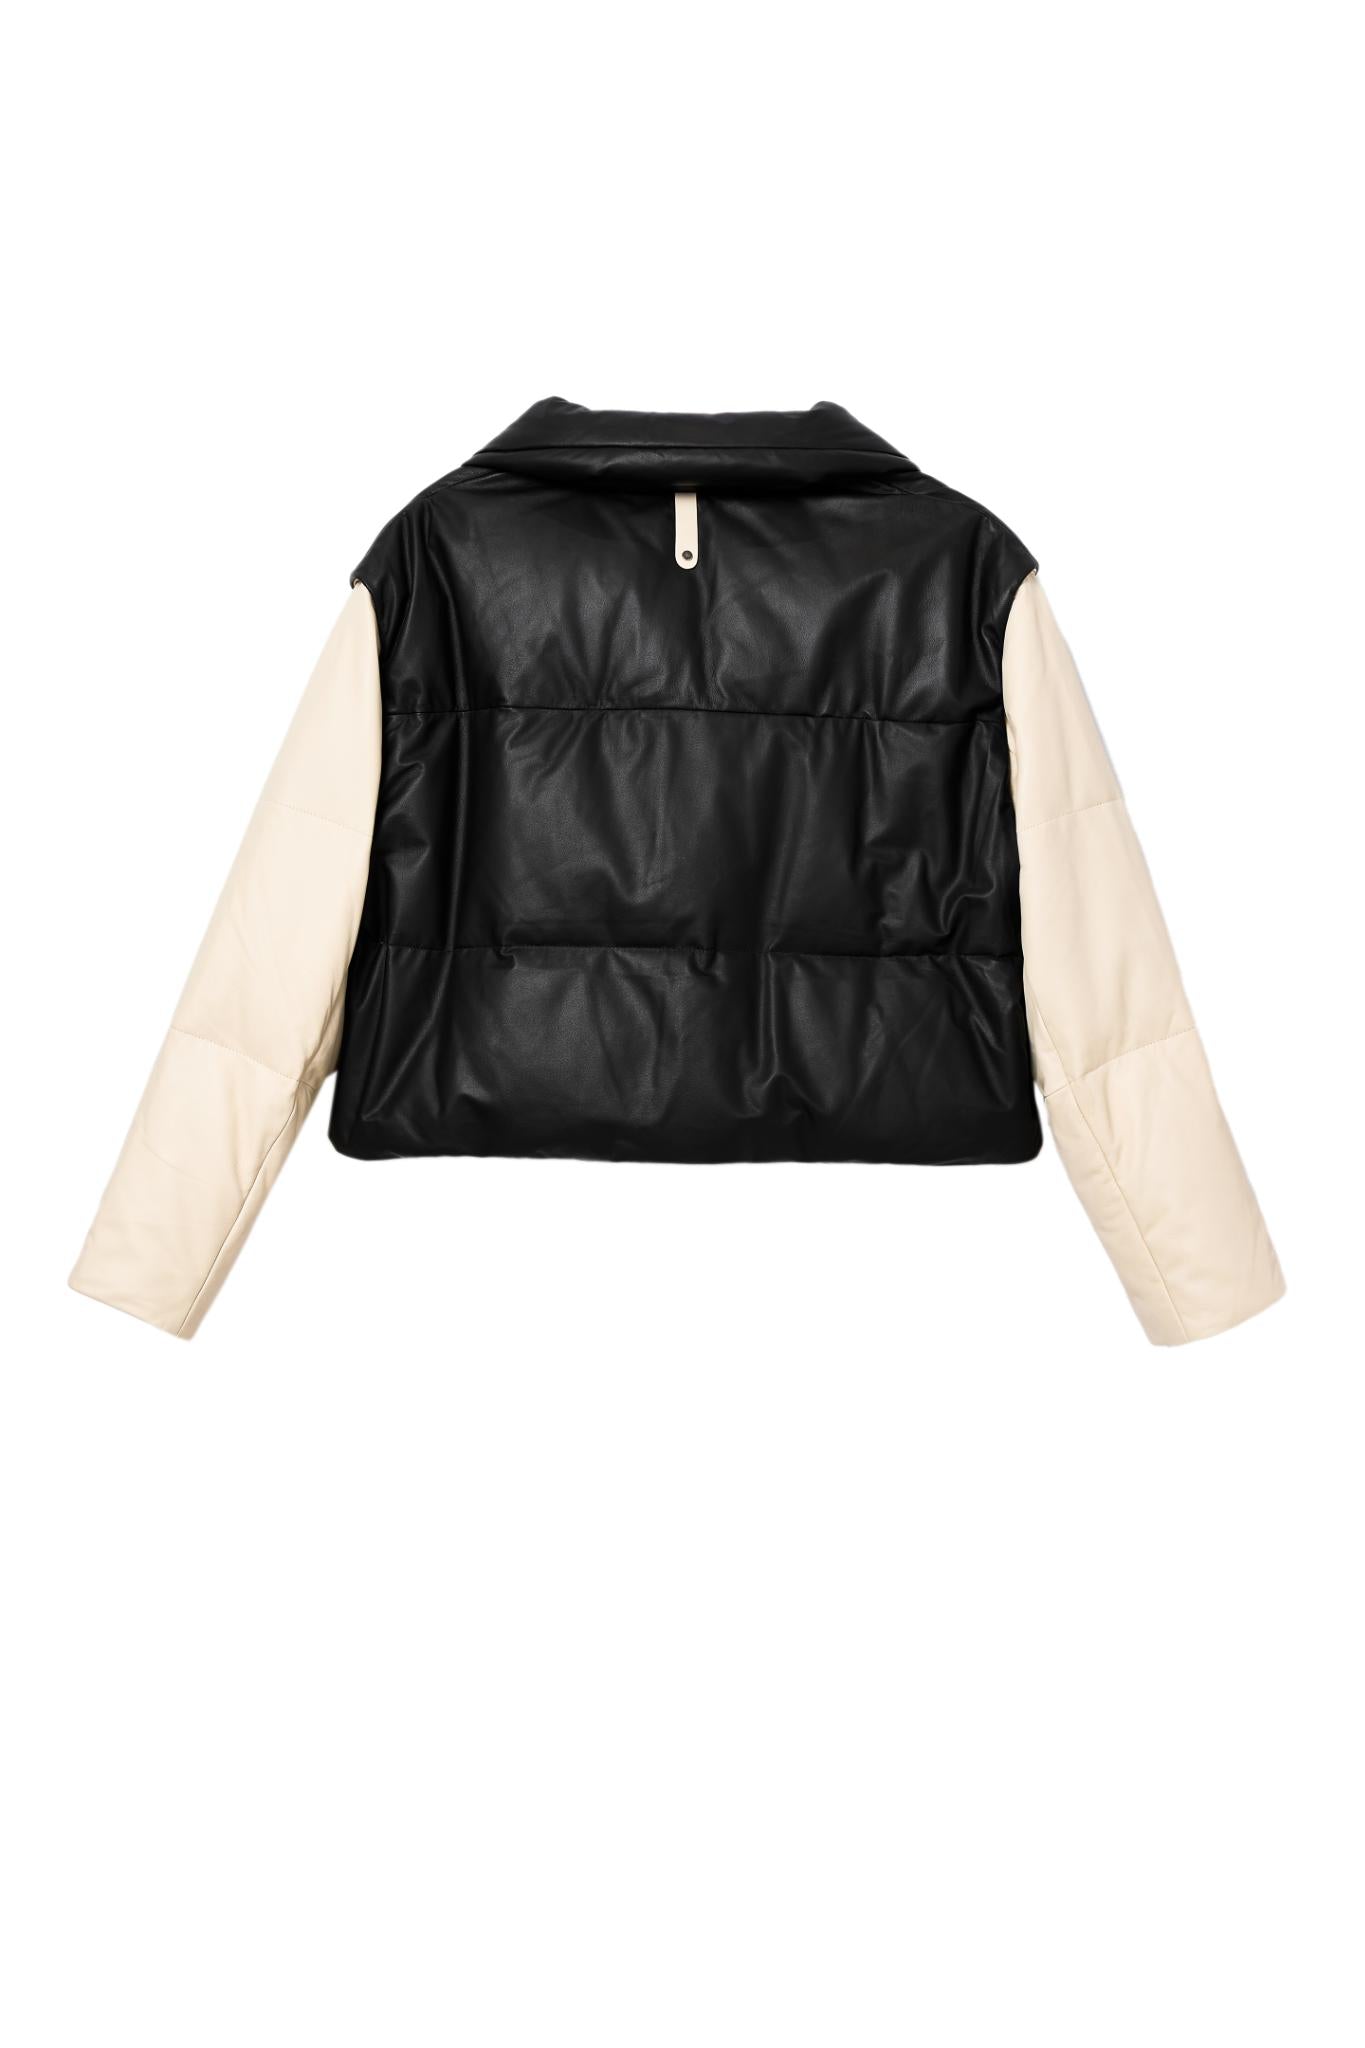 Urban Elegance: Chic Leather Down Jacket